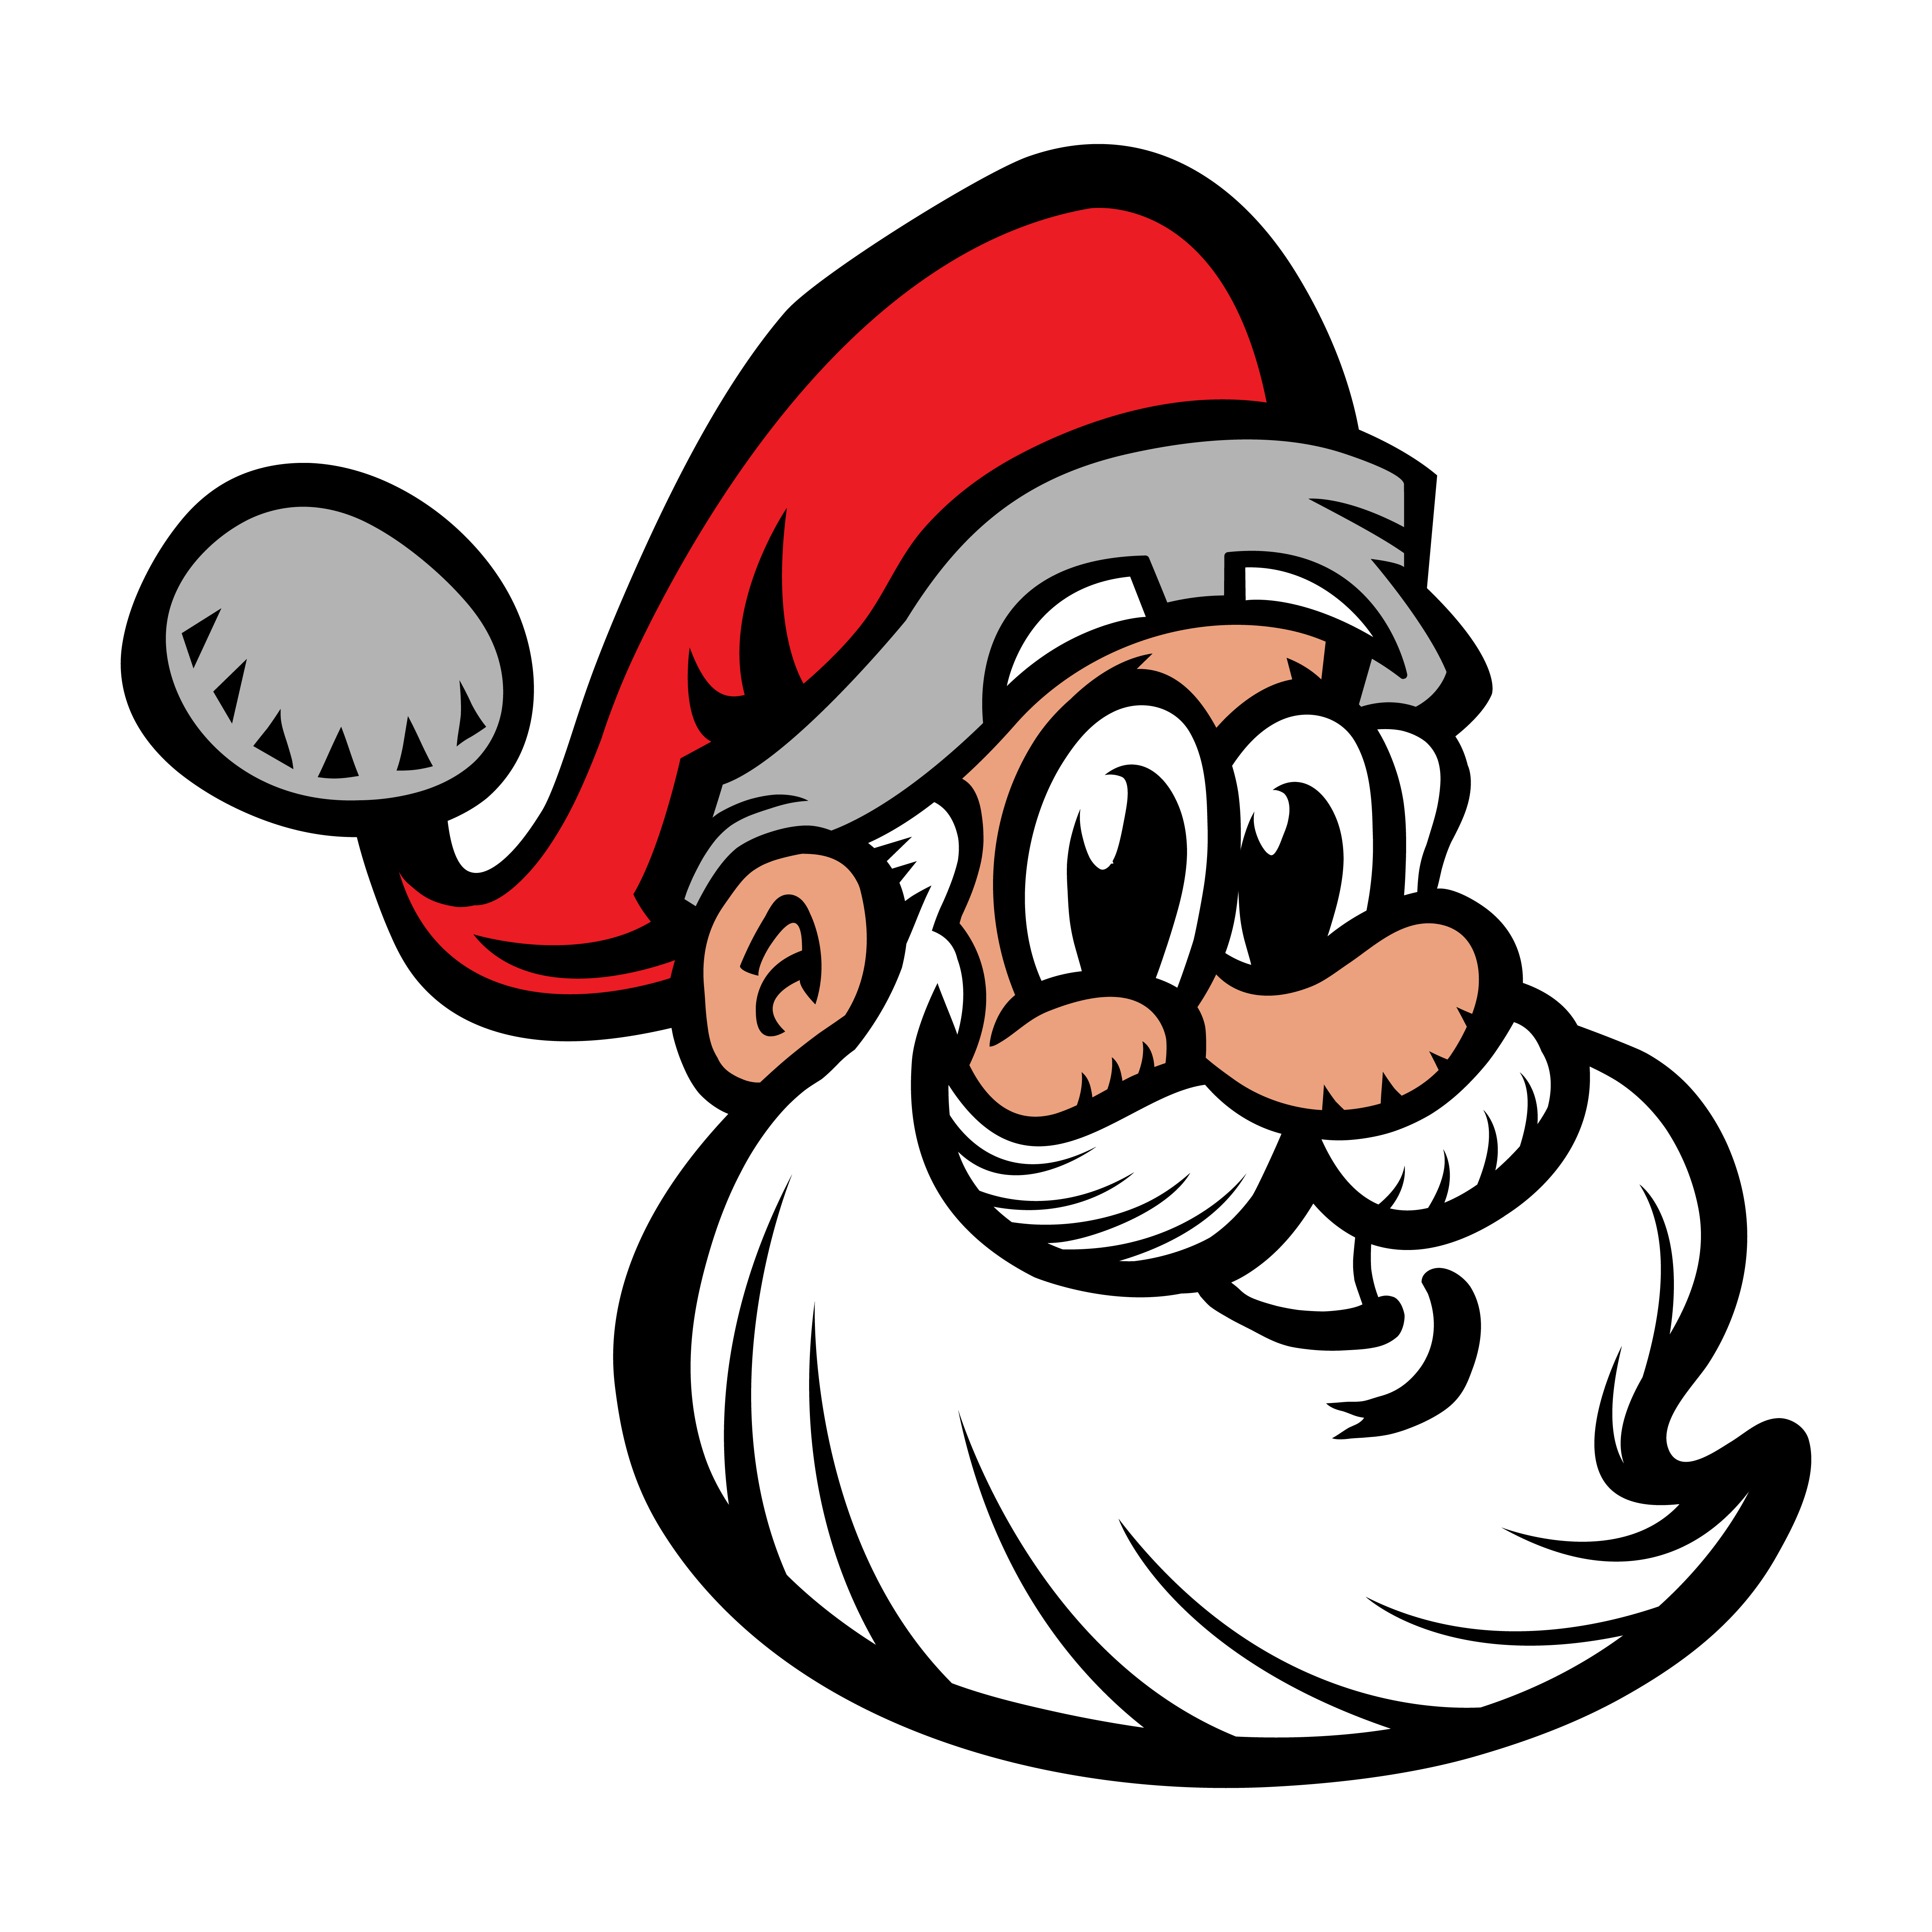 Santa Claus Face Vector Illustration 552918 - Download Free Vectors